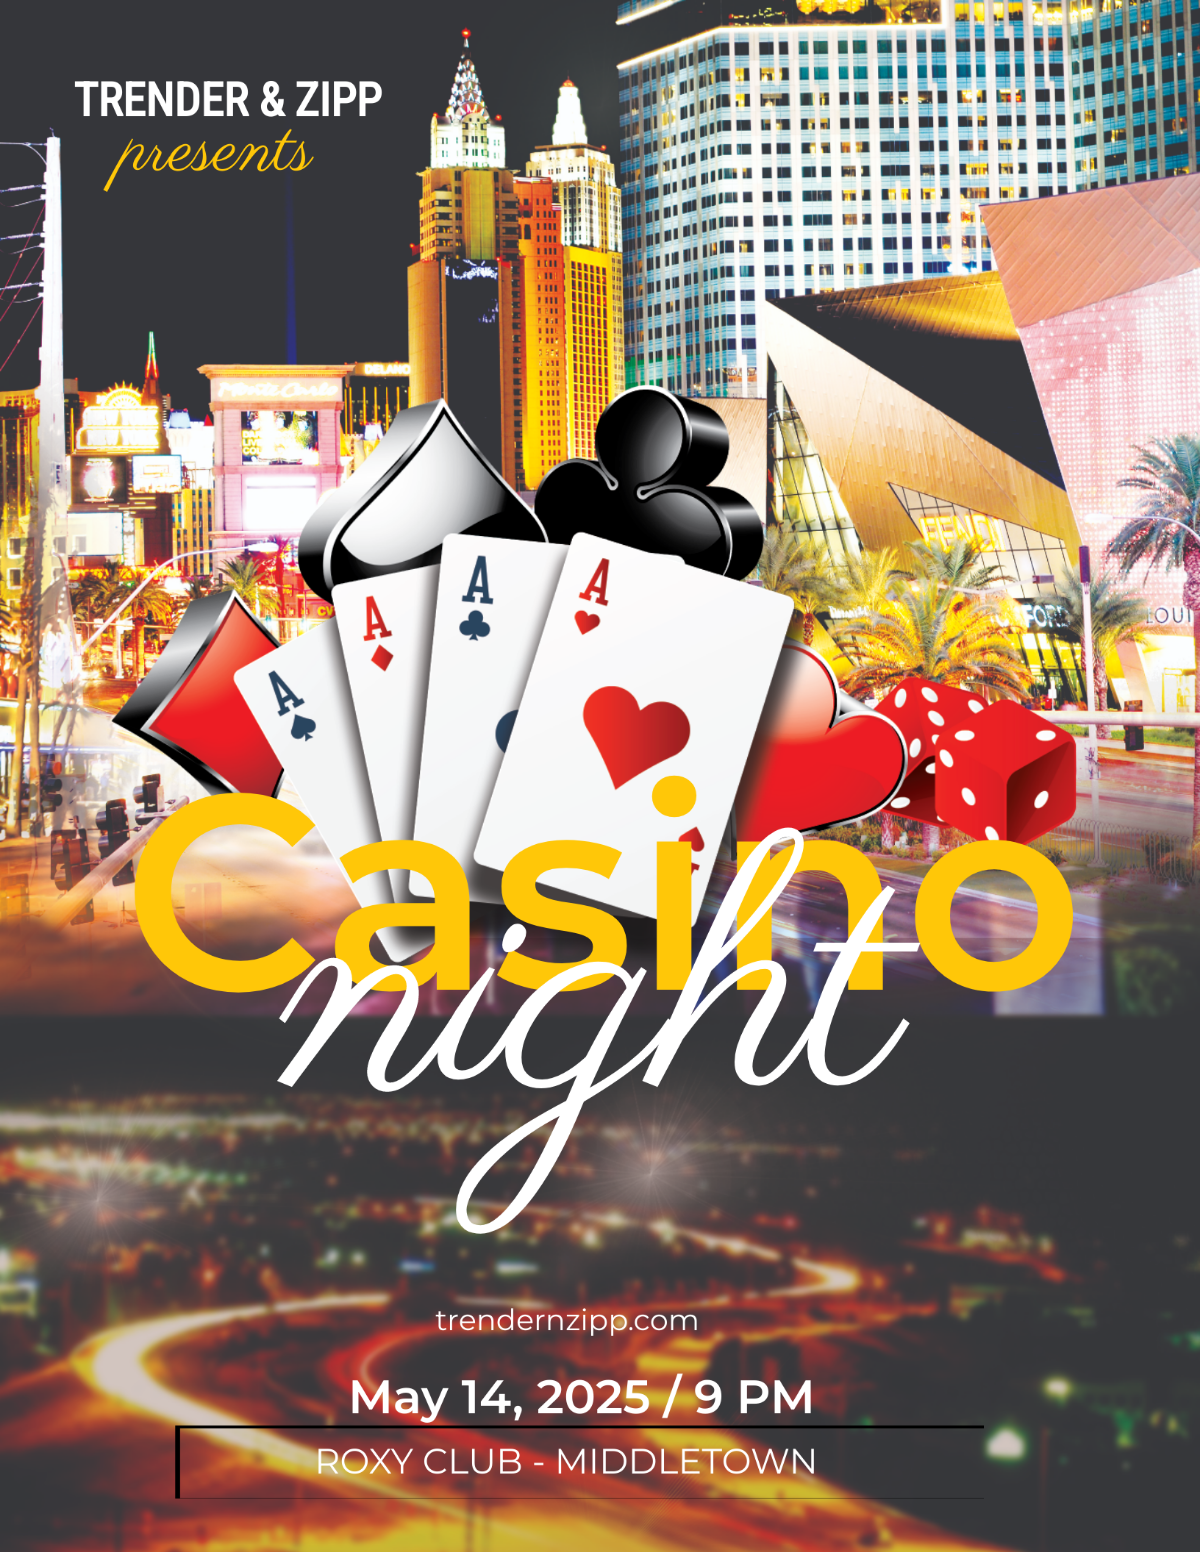 Casino Night Flyer Template